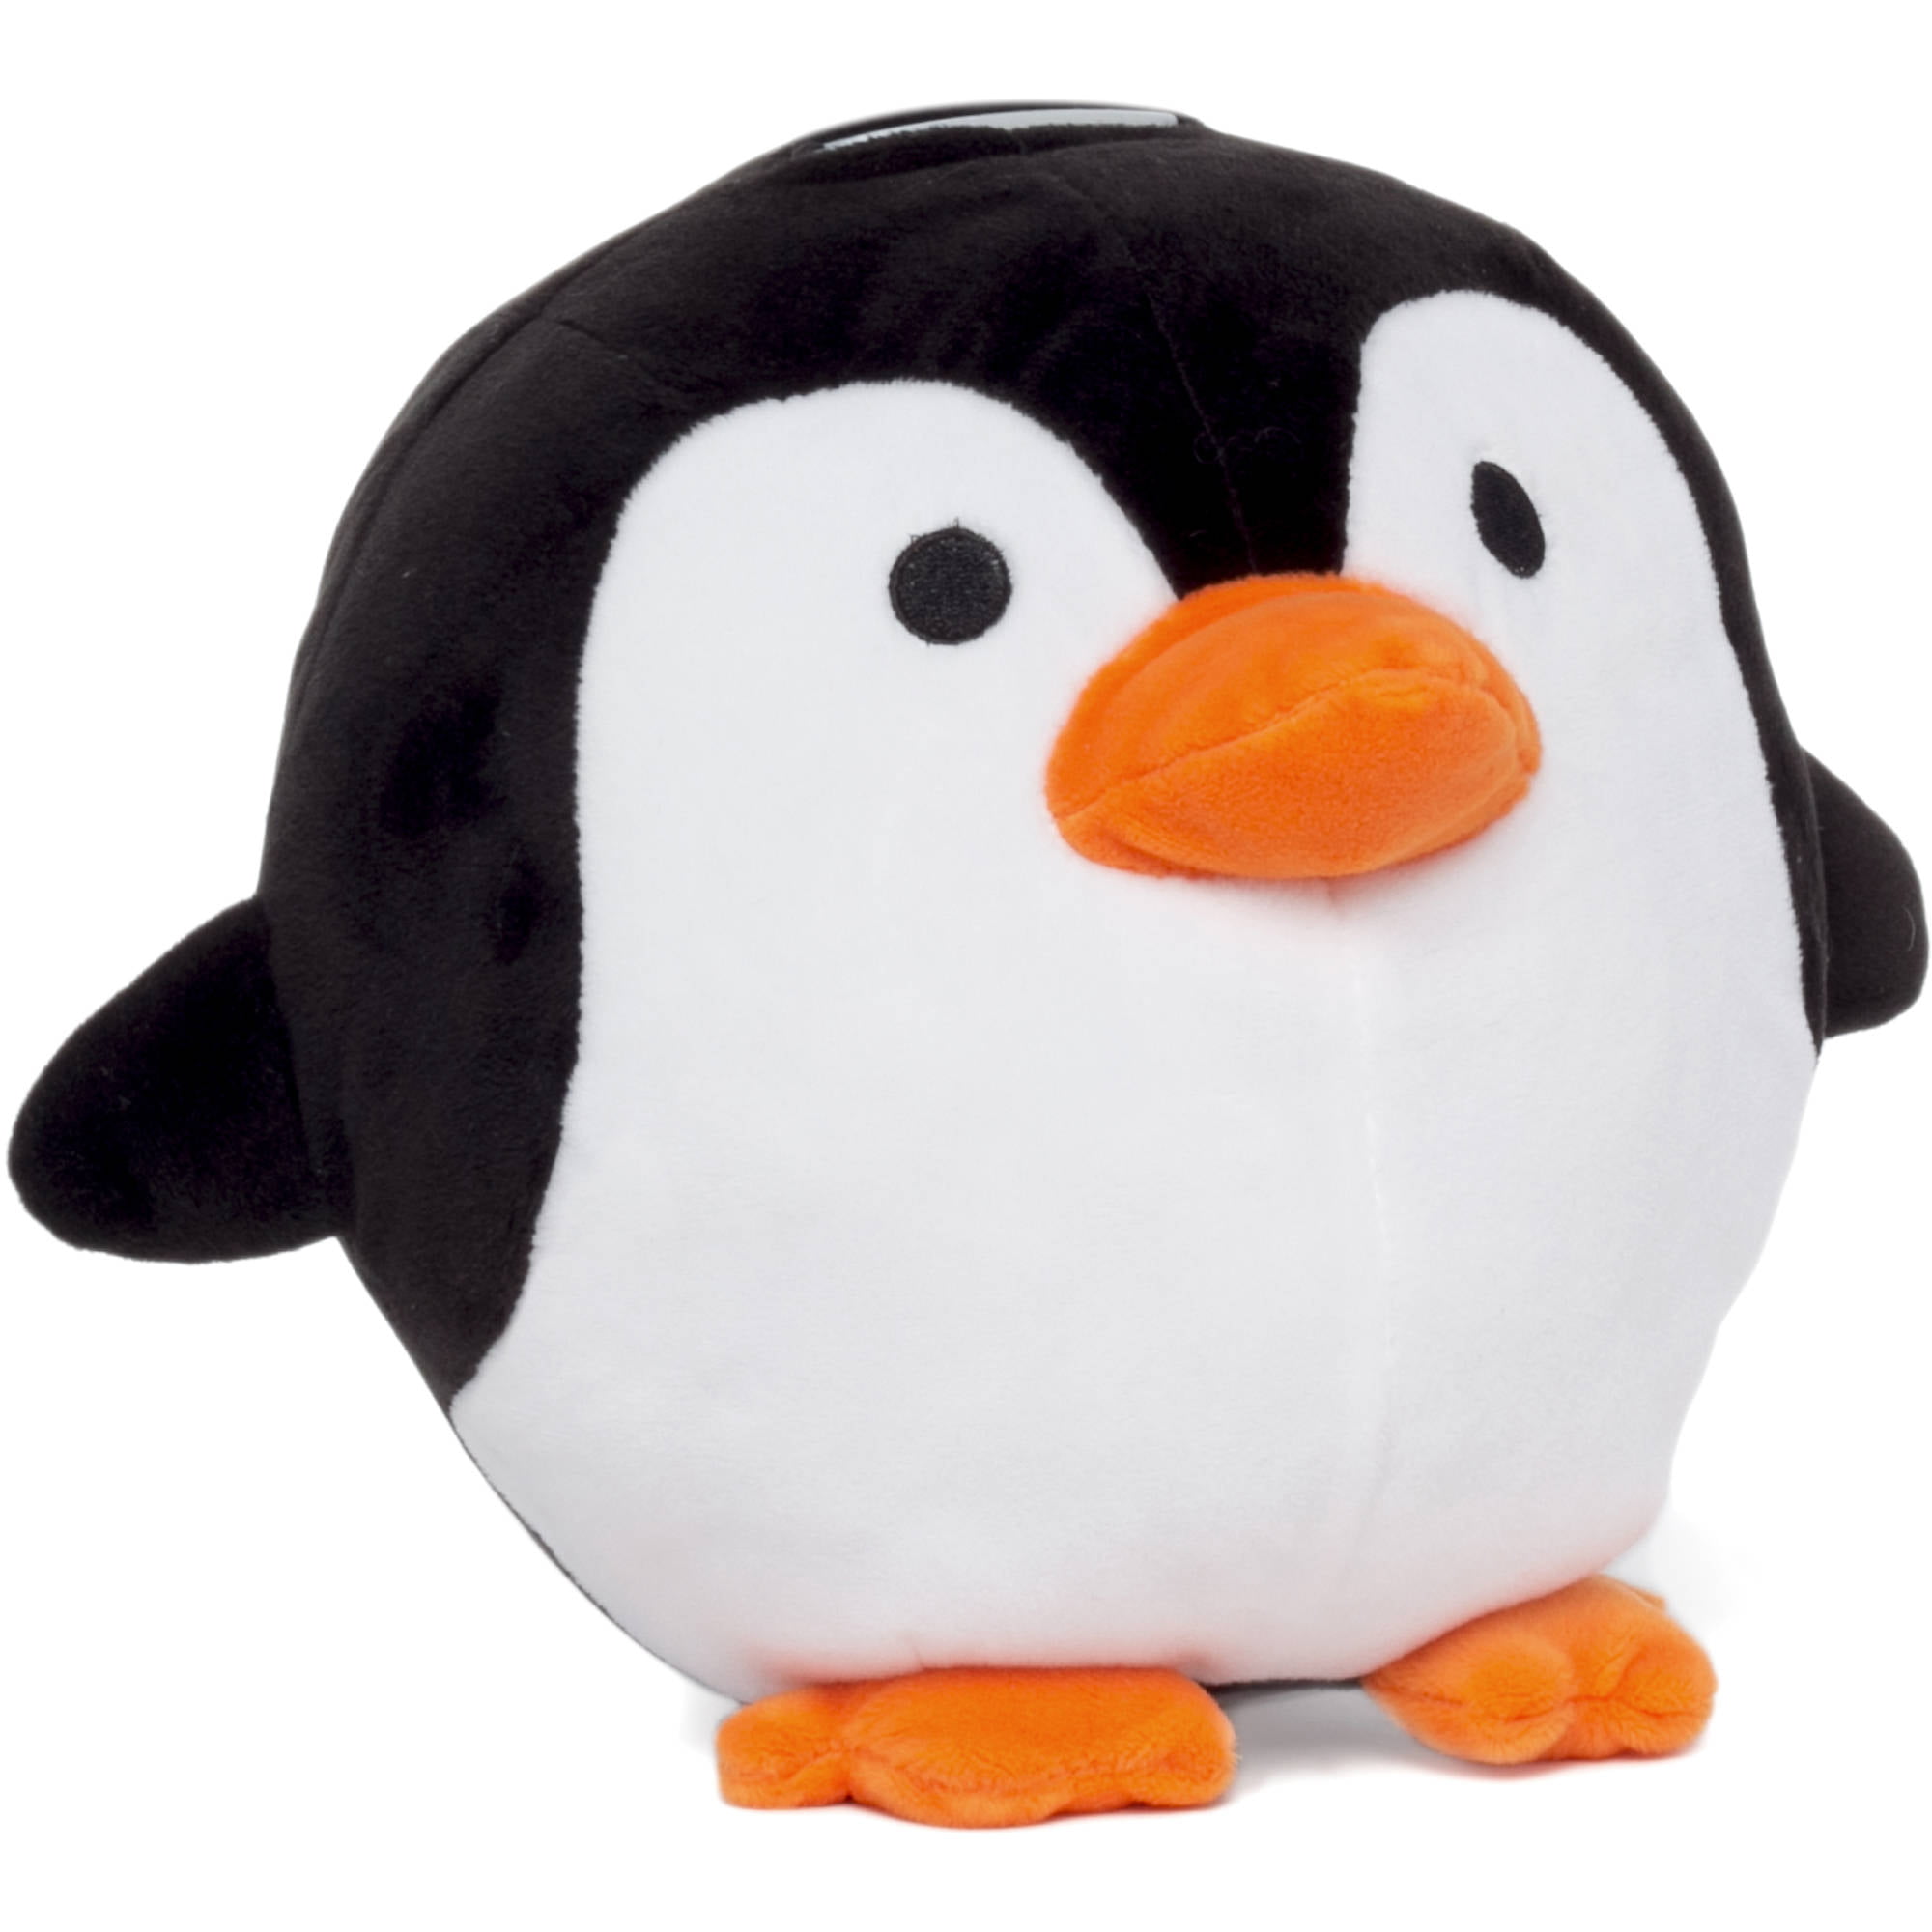 Penguin Plush Piggy Bank - Walmart.com 